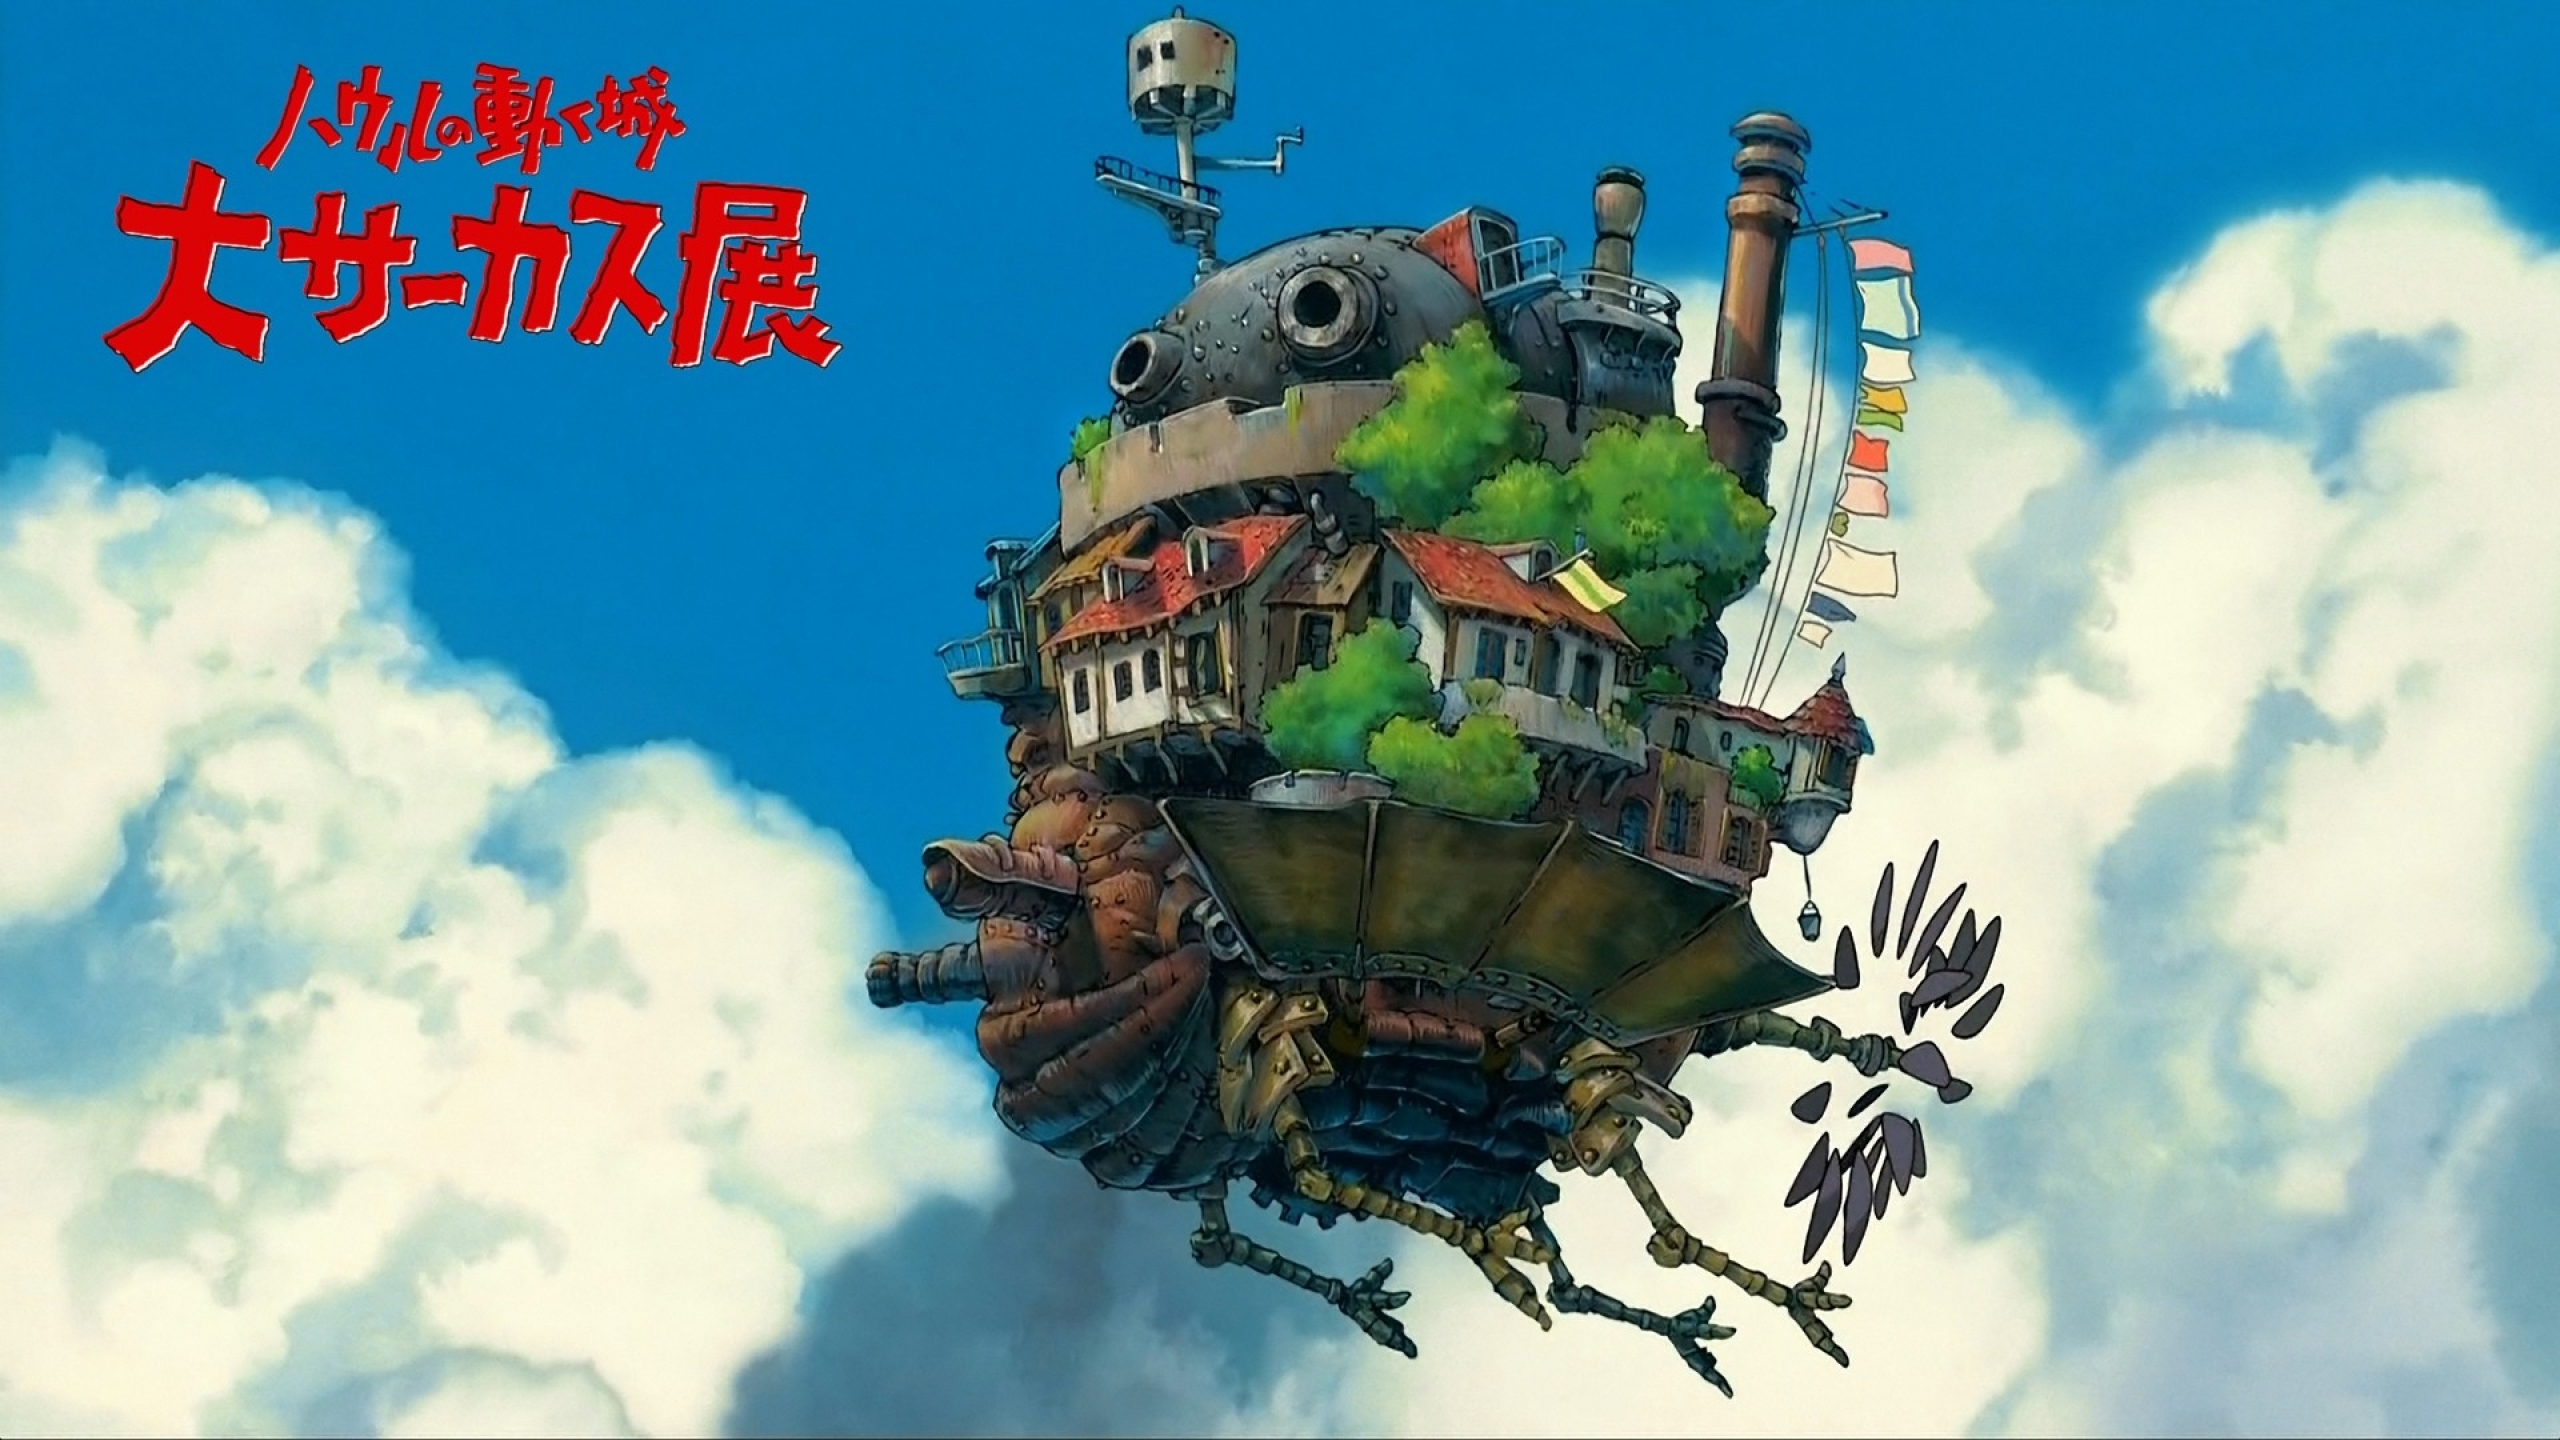 Wallpaper Clouds Hayao Miyazaki Fly Studio Ghibli